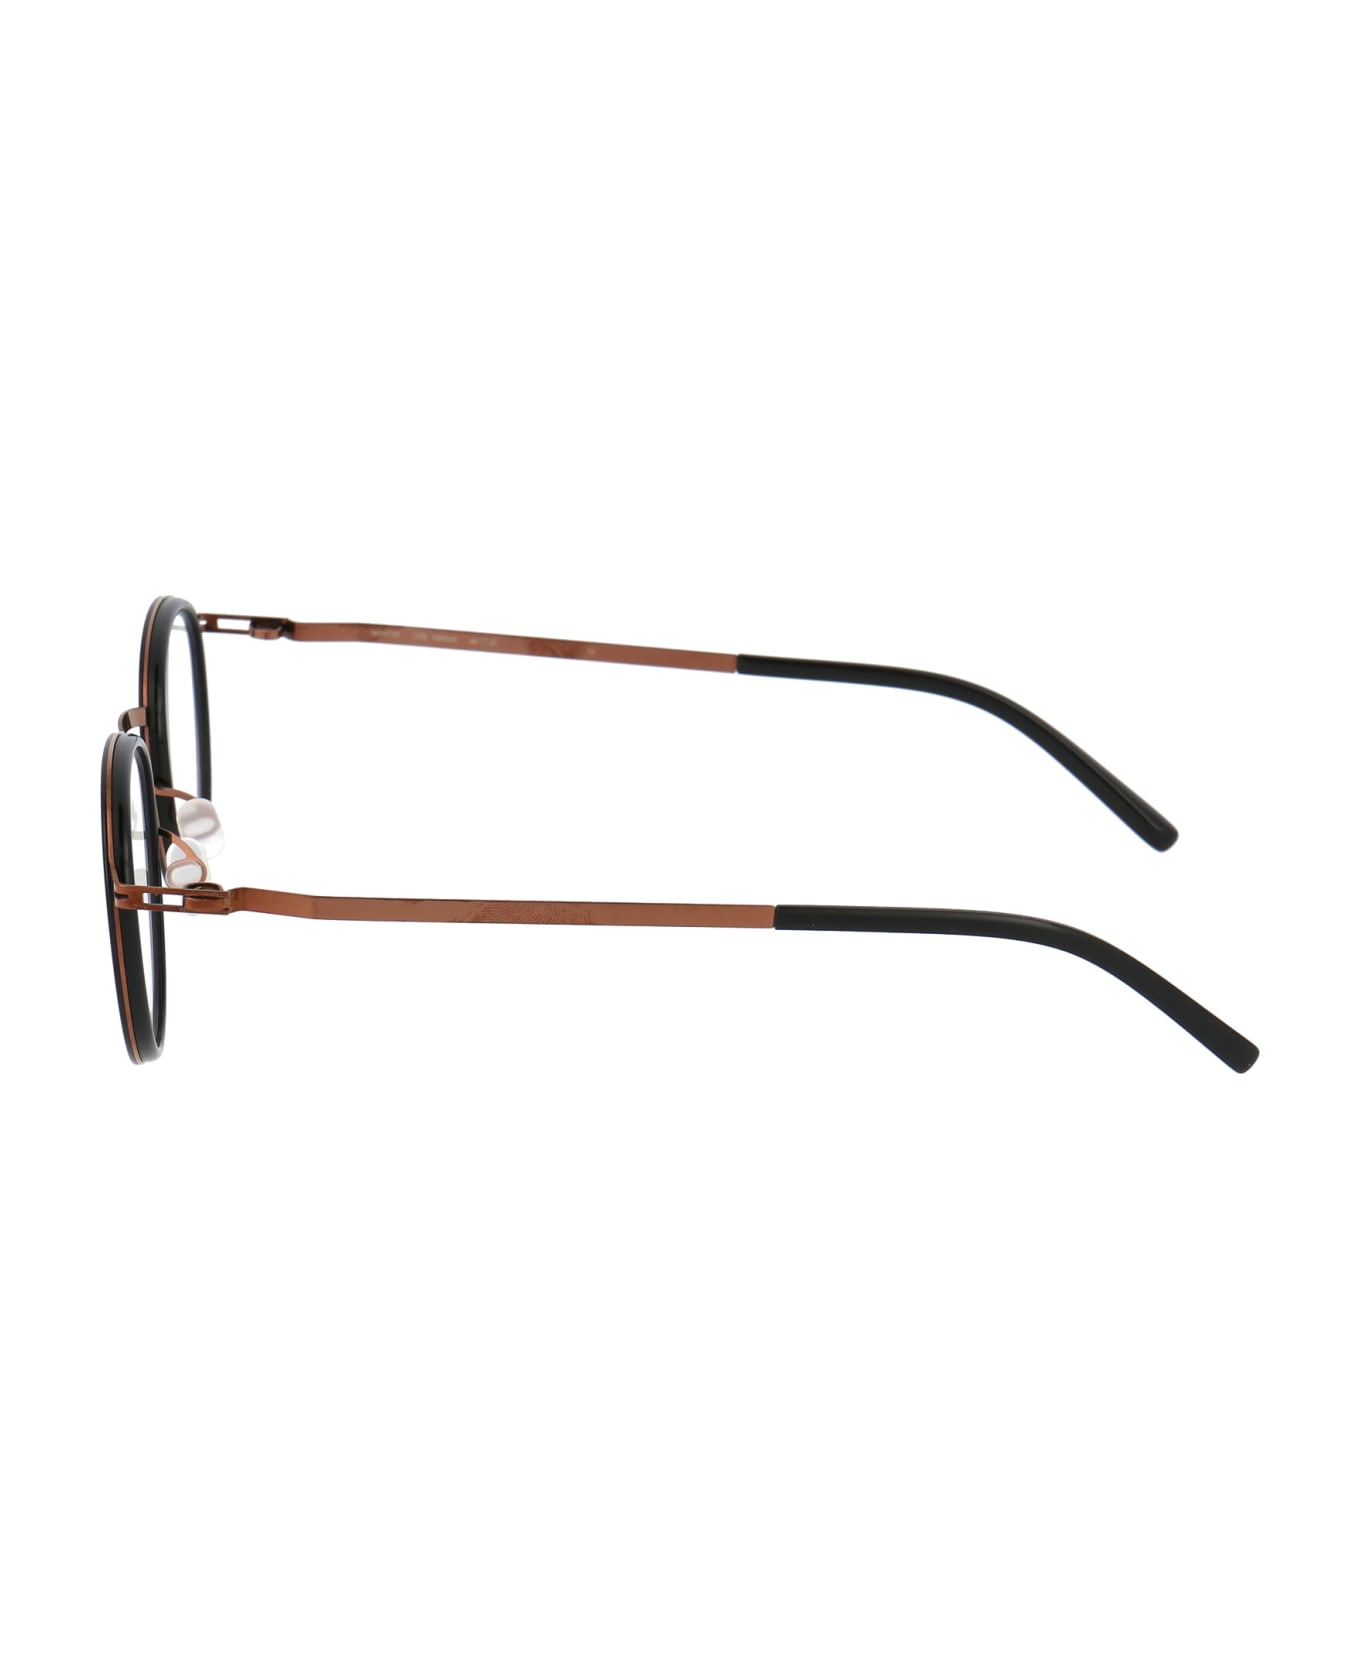 Mykita Kirima Glasses - 818 A37-Shiny Copper/Black Clear